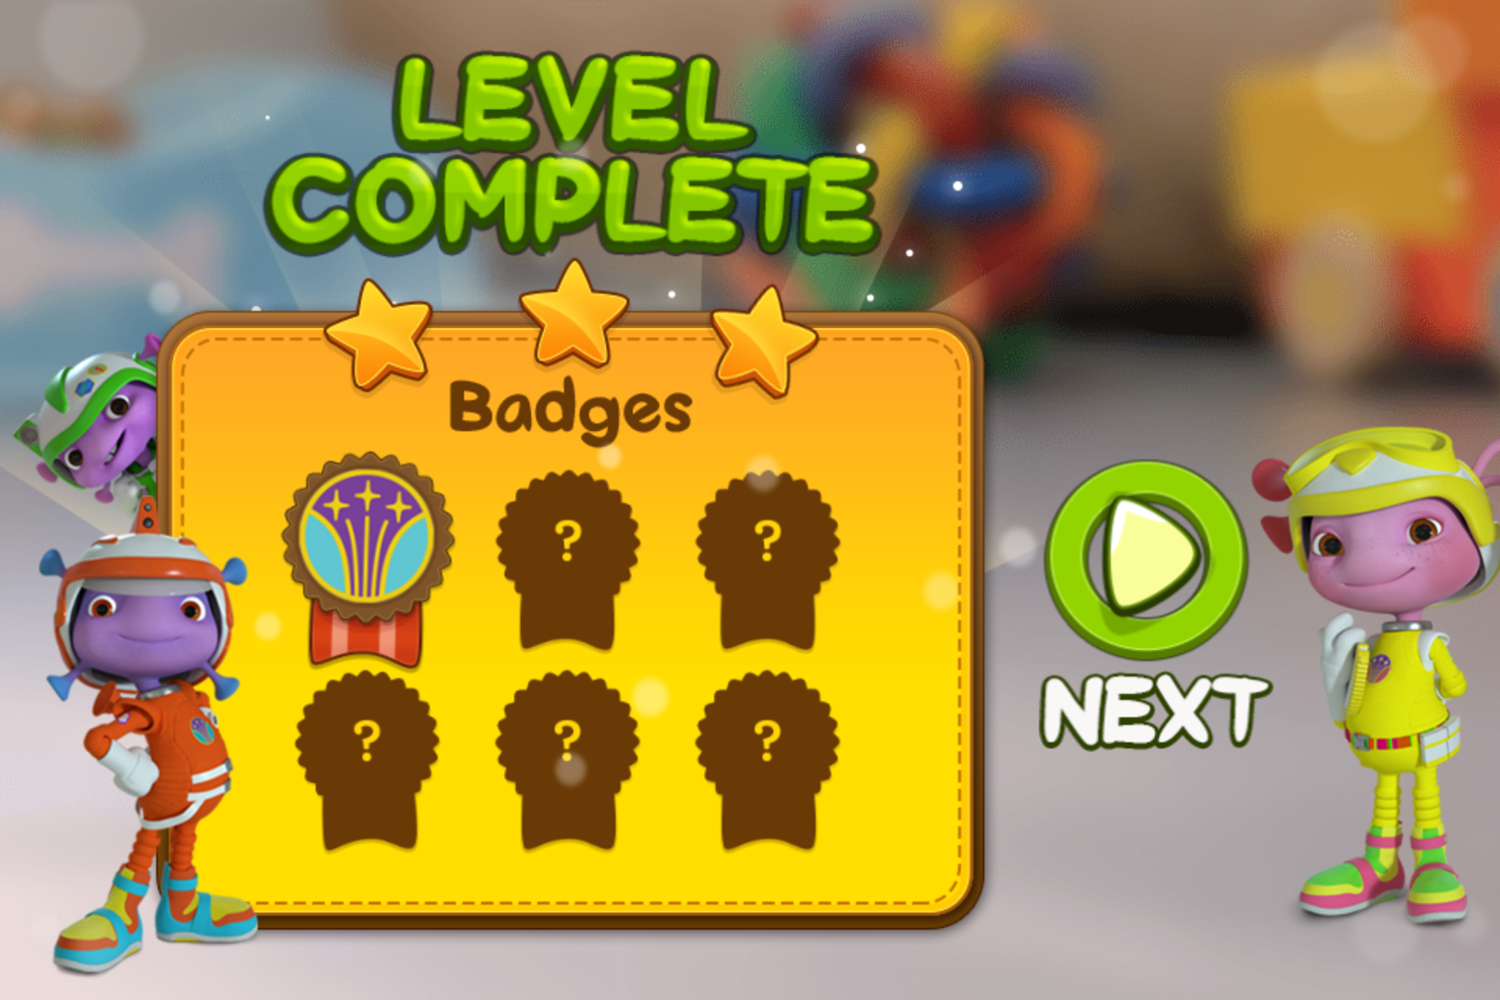 Floogals Maze Adventure Game Level Complete Screenshot.